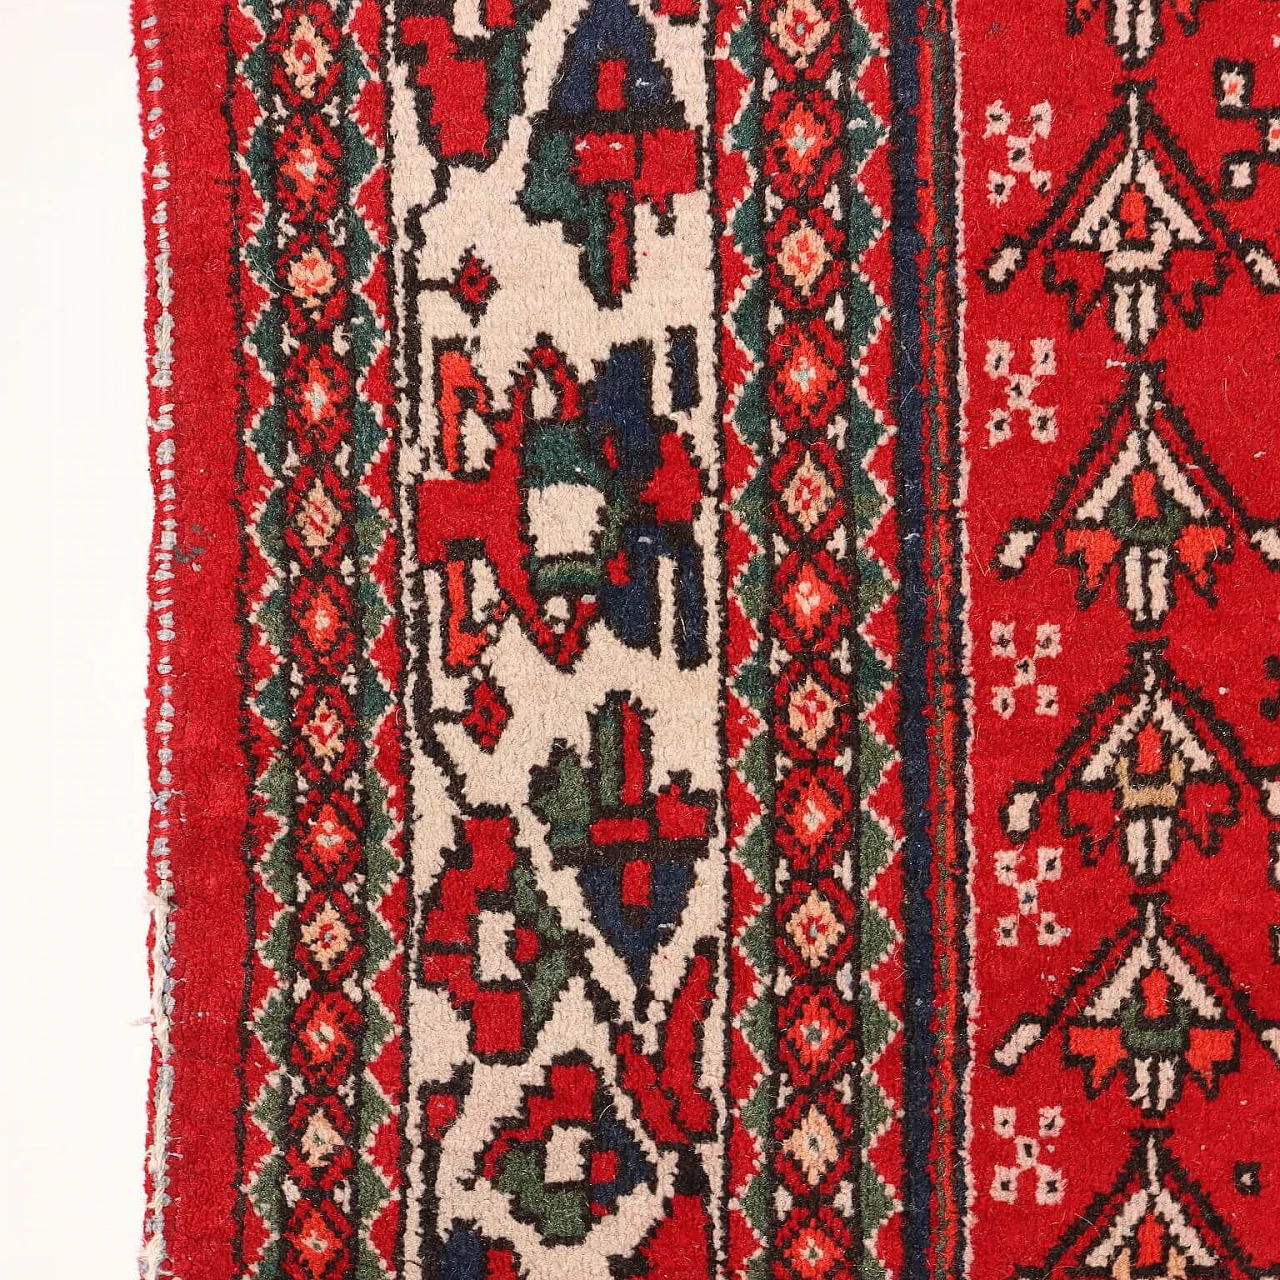 Iranian cotton and wool Kaskay rug 6